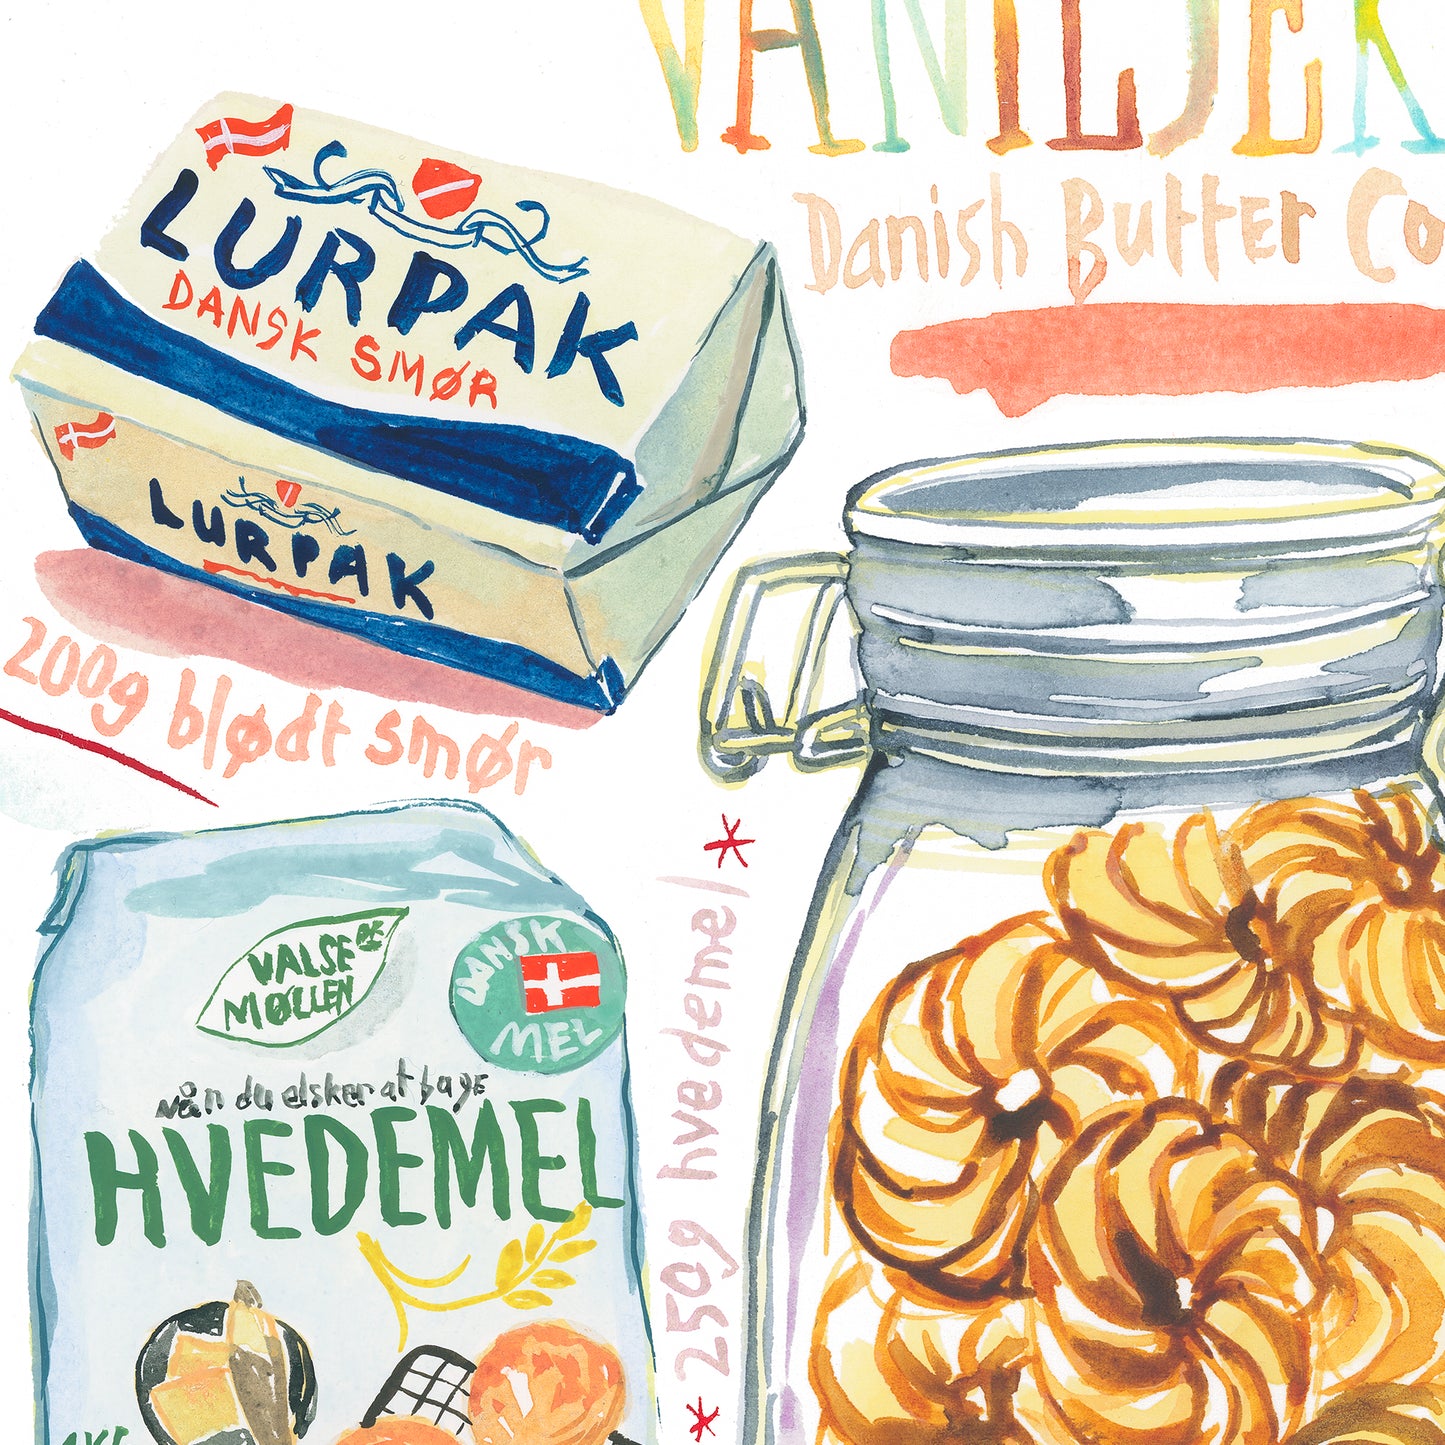 Danish Butter Cookie recipe - Vaniljekranse